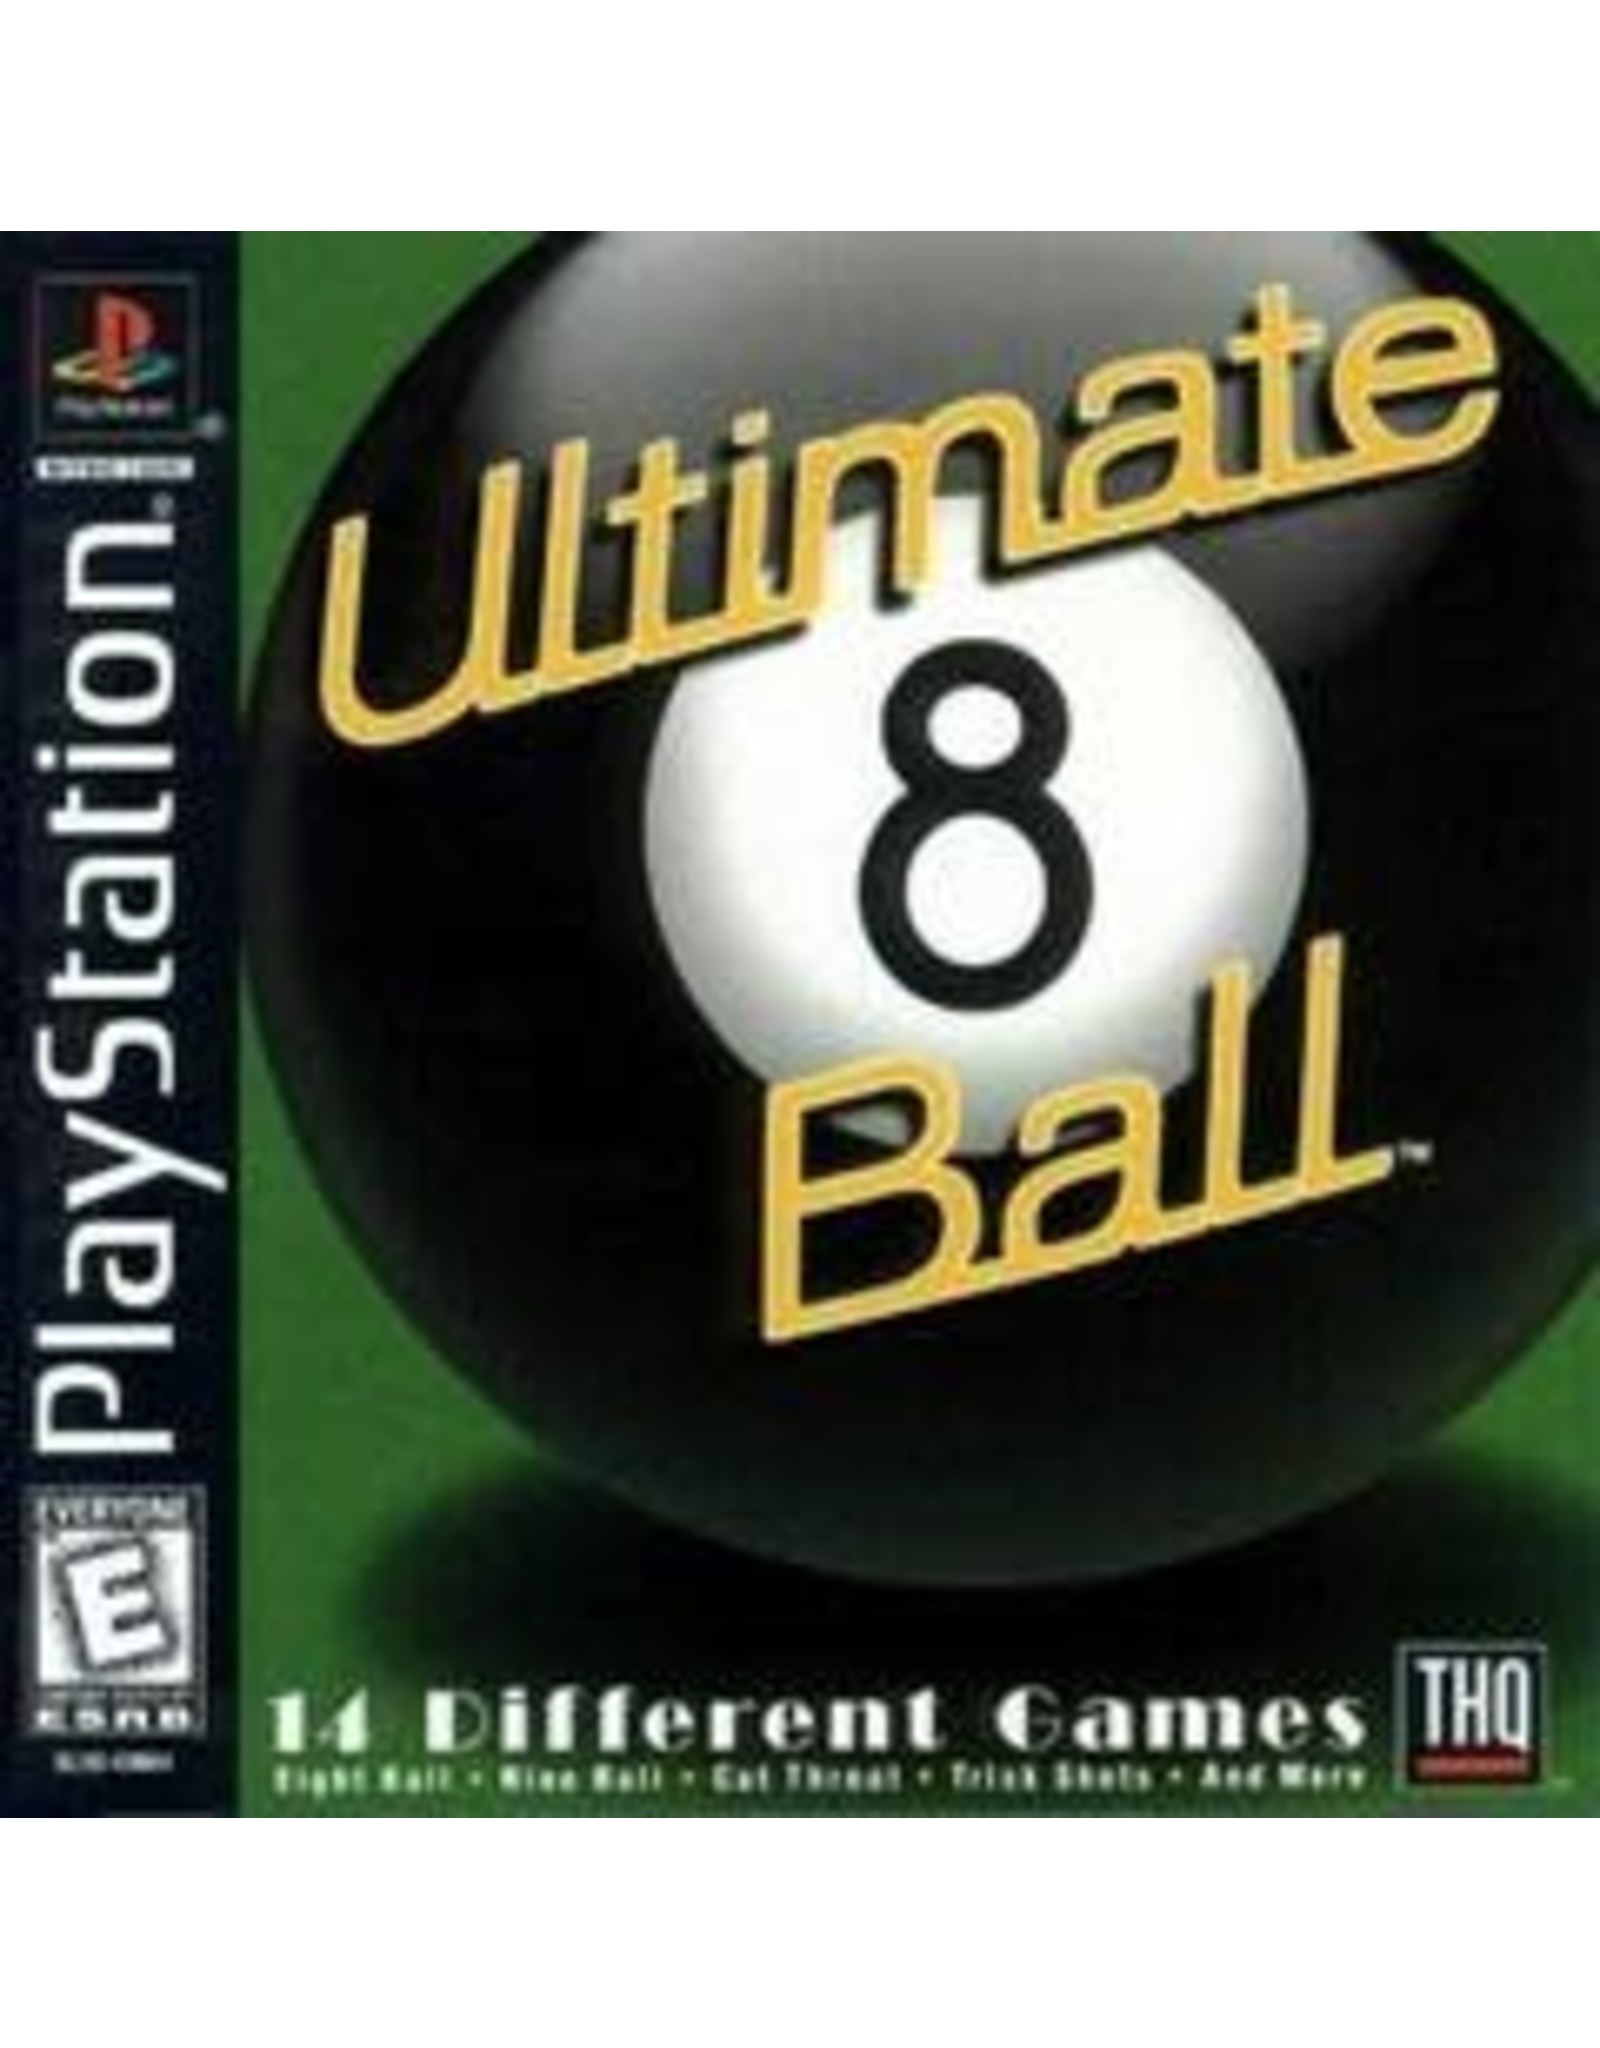 Playstation Ultimate 8 Ball (CIB)